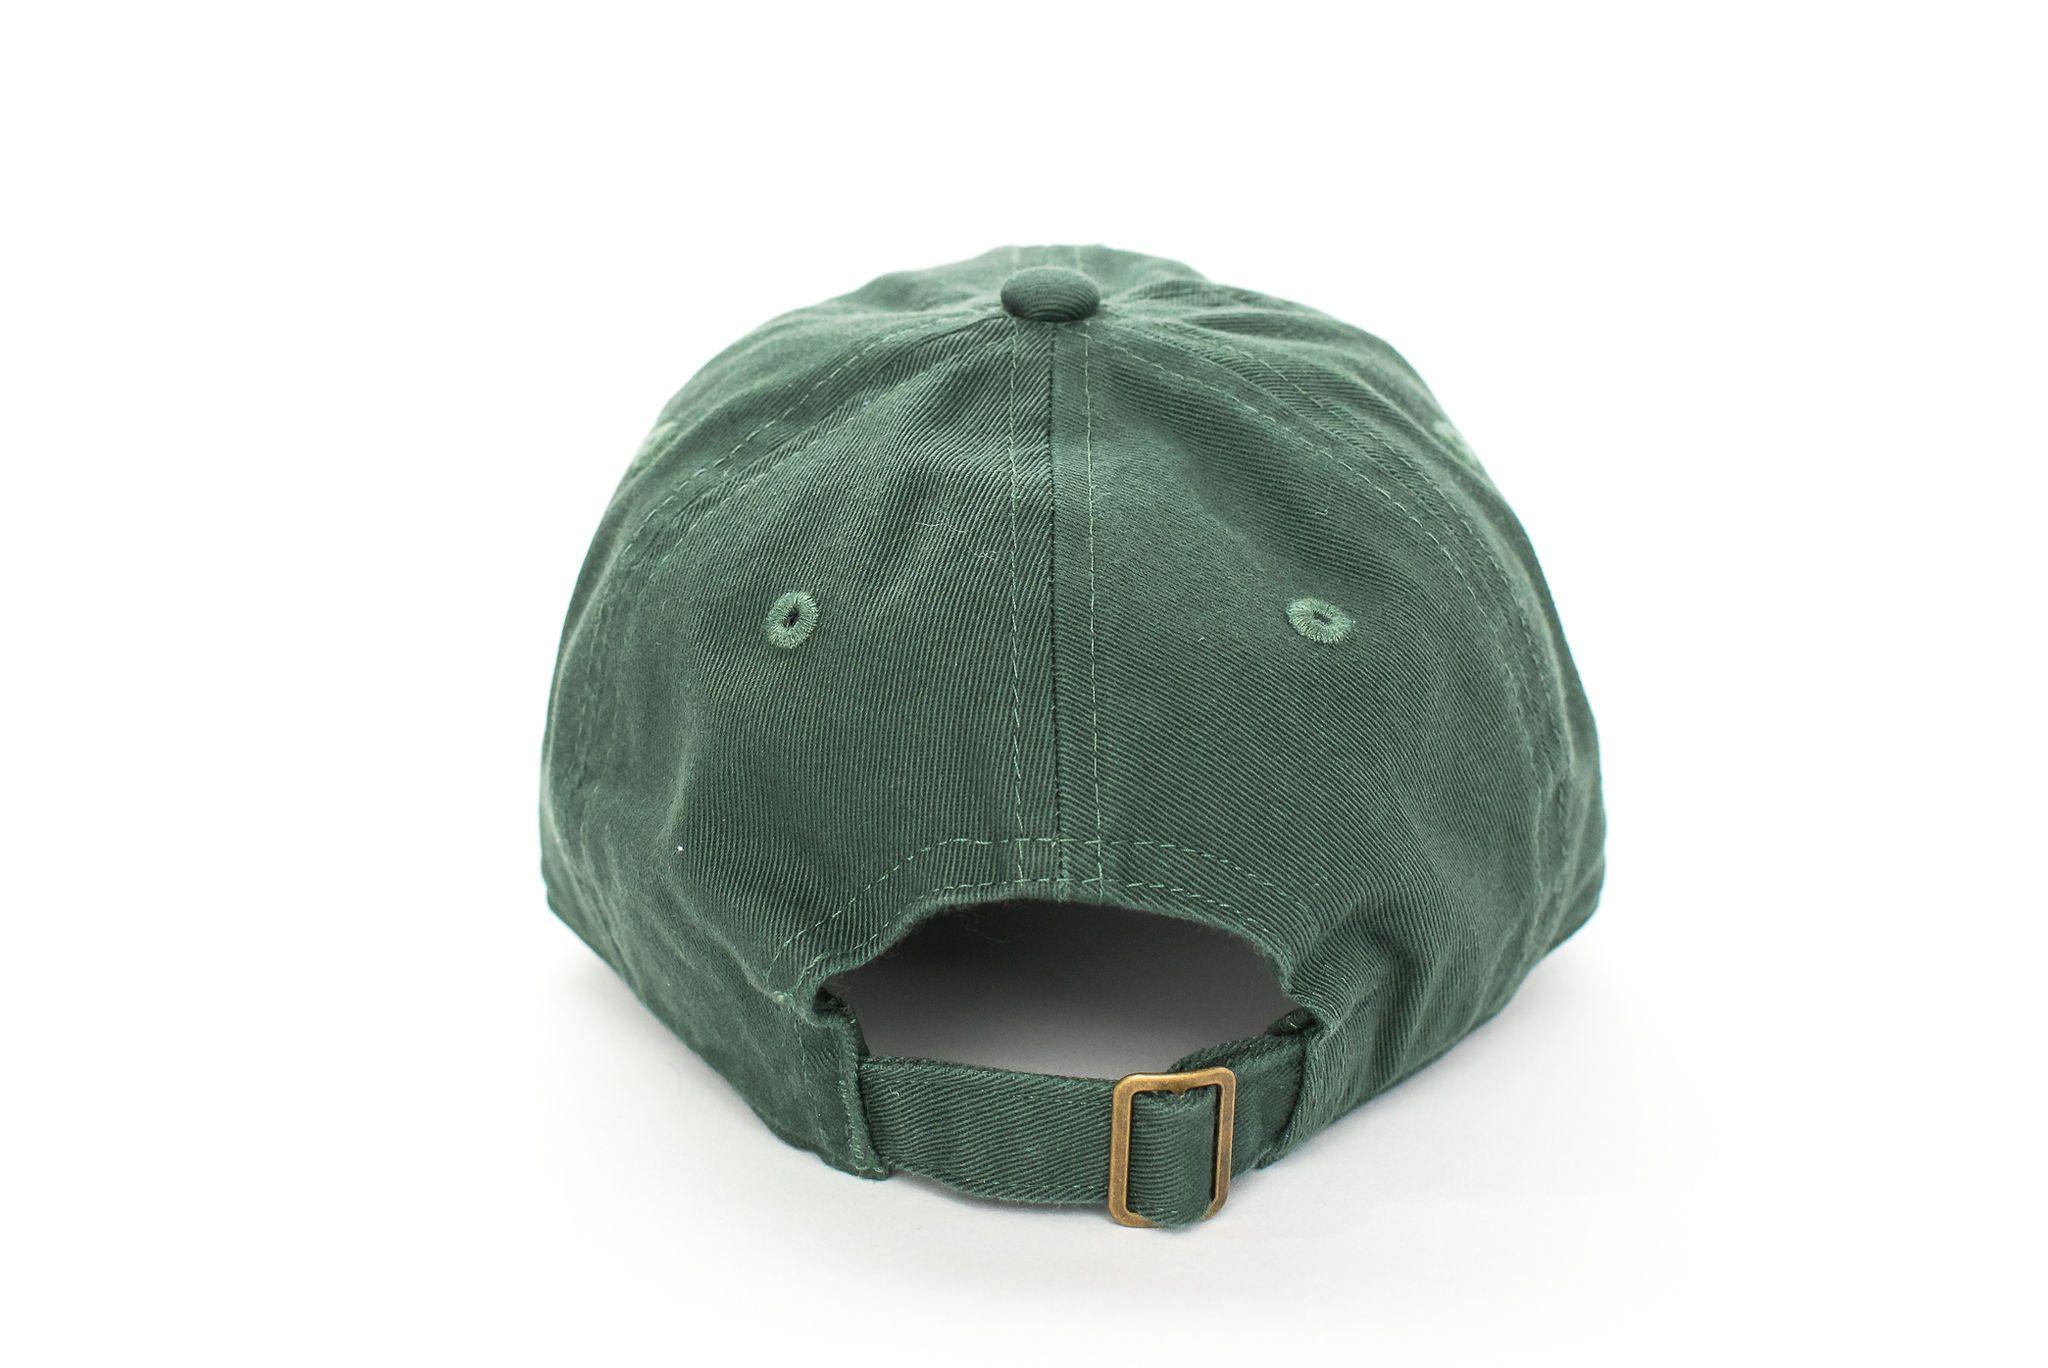 Hunter Green Big Bro Hat